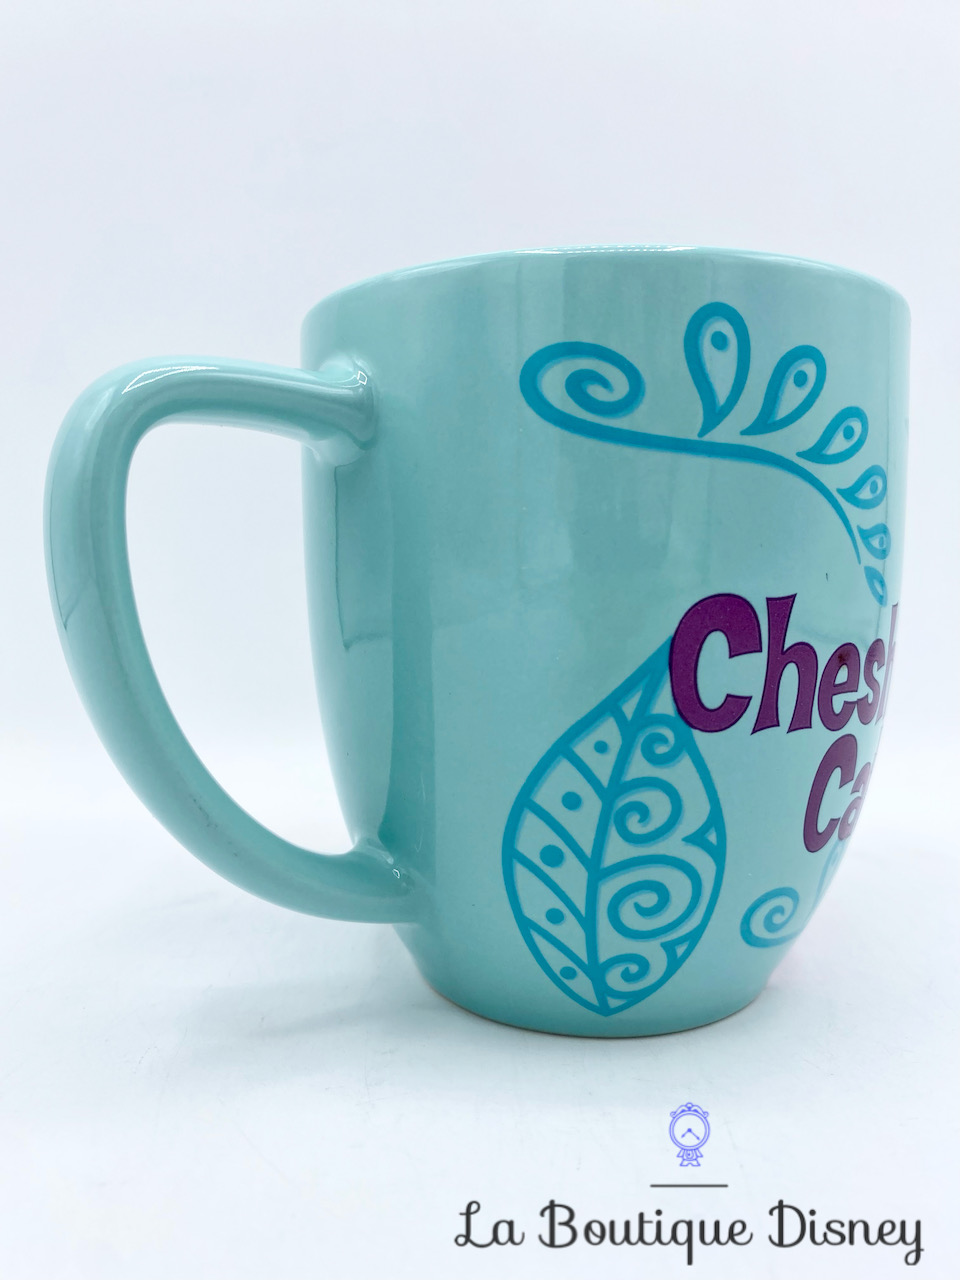 tasse-chat-cheshire-cat-disney-parks-mug-alice-pays-des-merveilles-bleu-rose-11